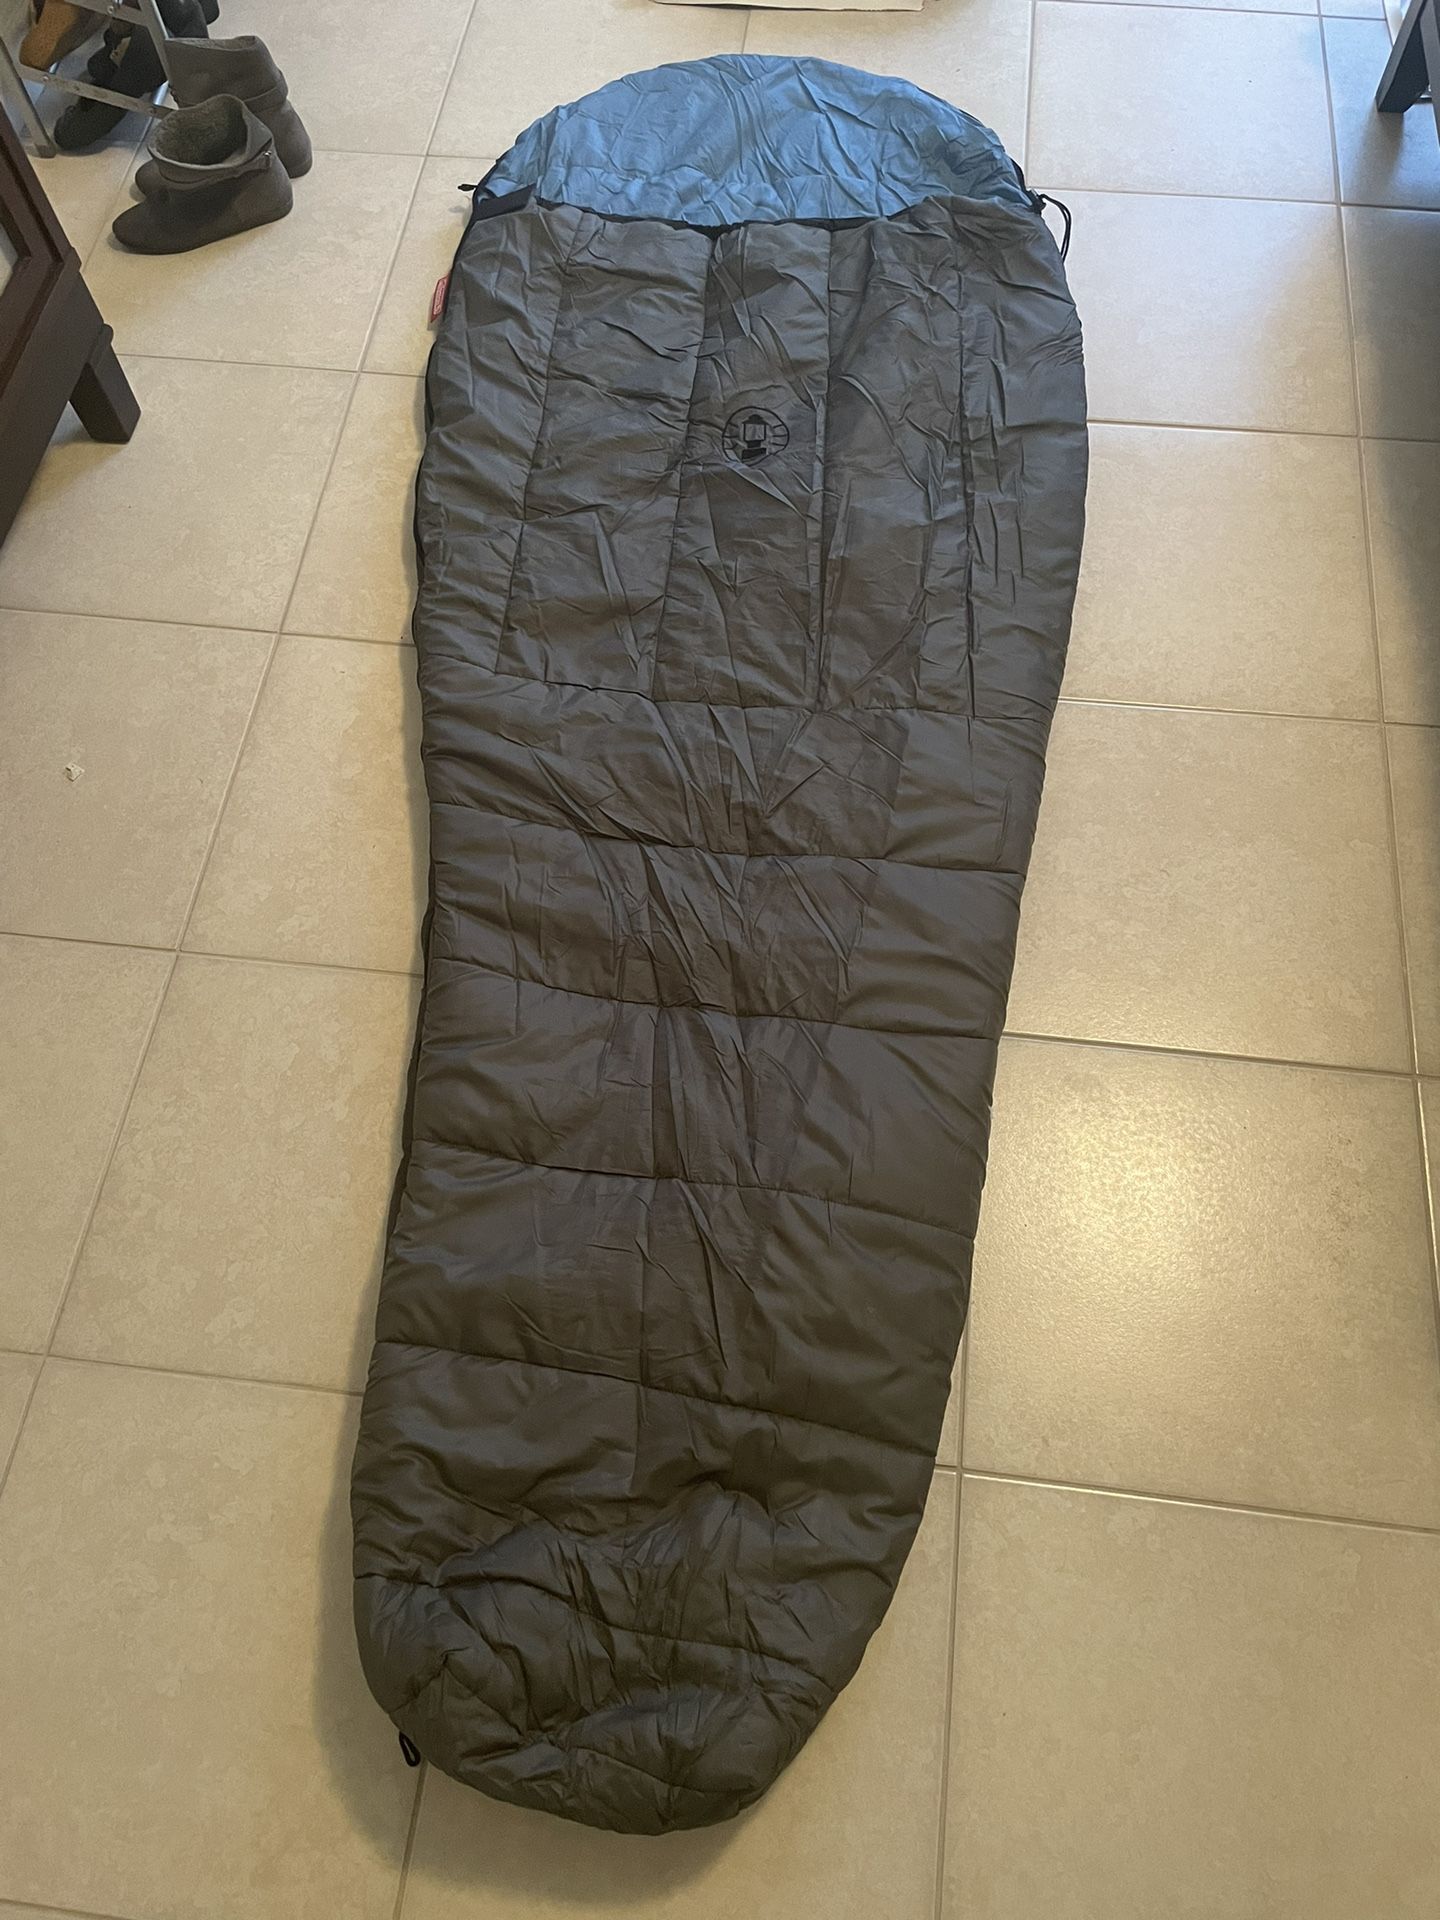 Coleman Mummy Sleeping Bag, 83 Inches Long